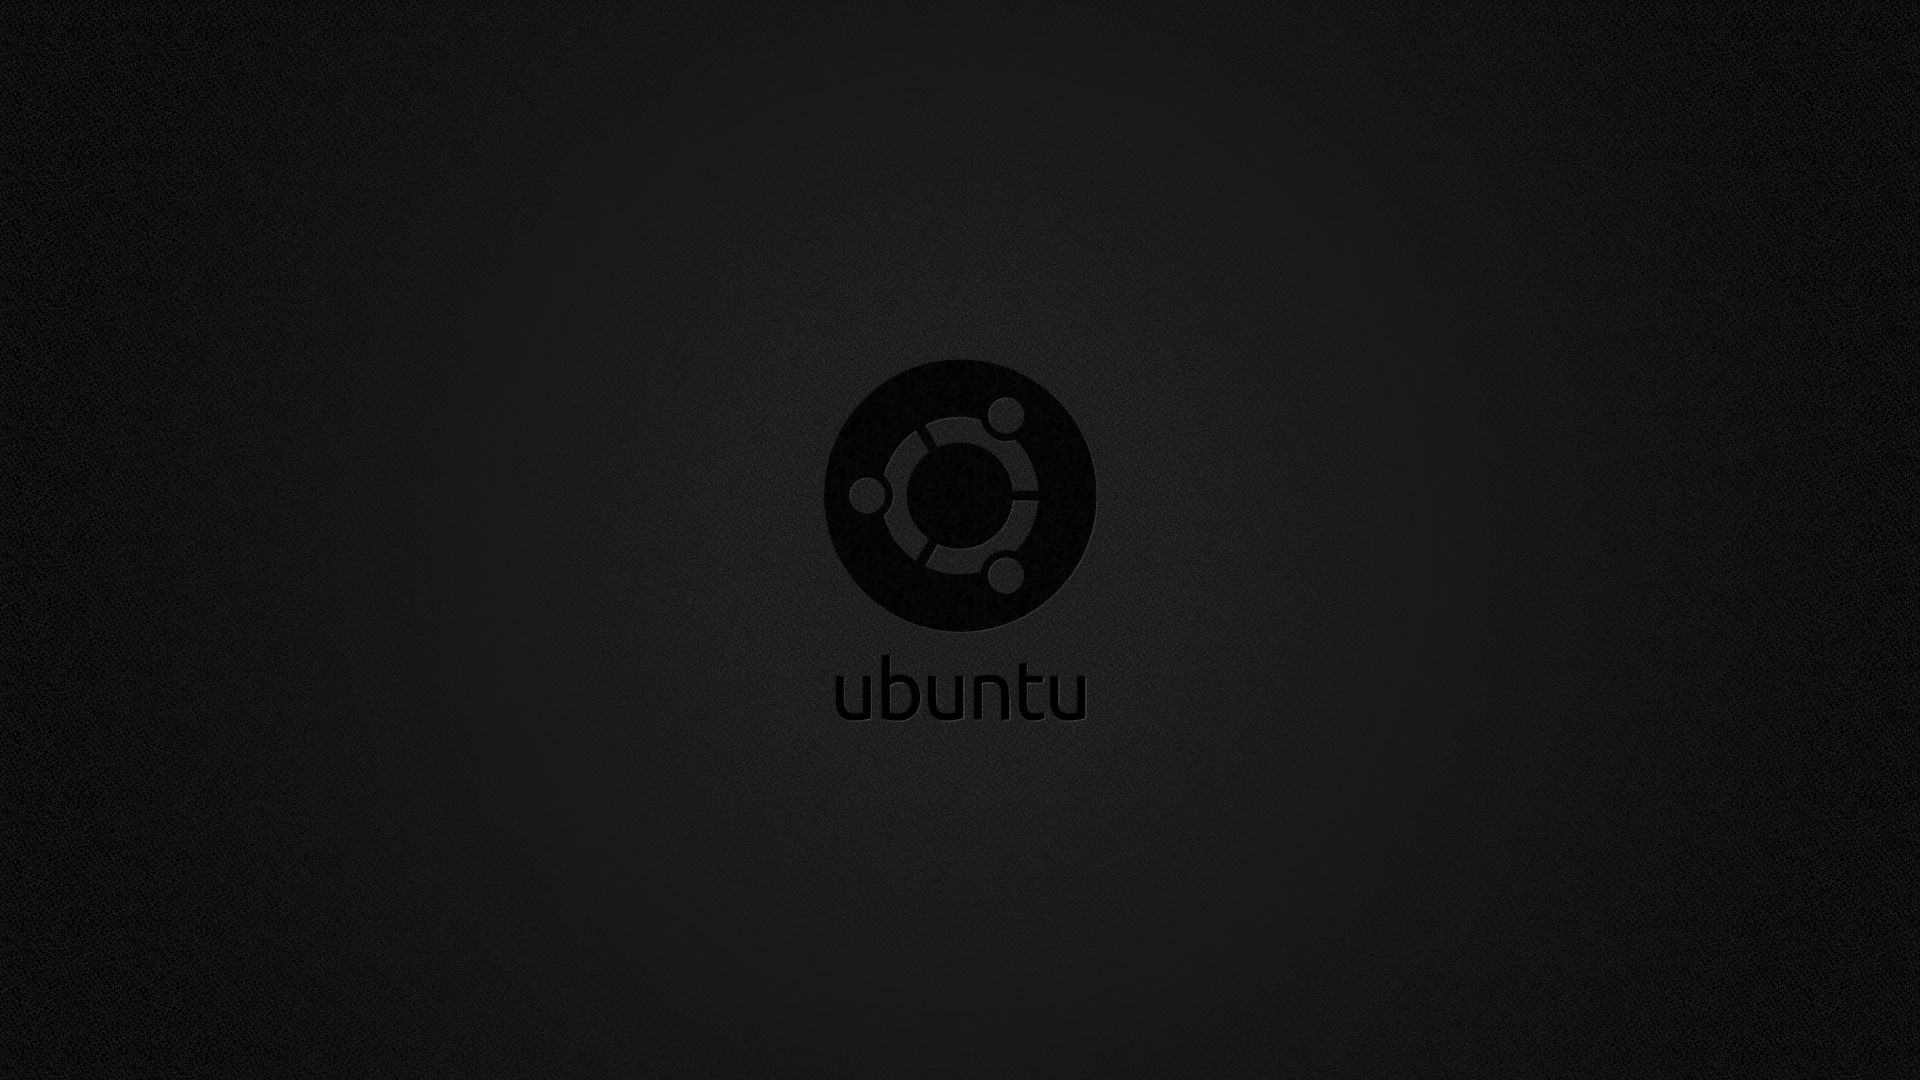 Dark Ubuntu Logo Wallpaper Umad